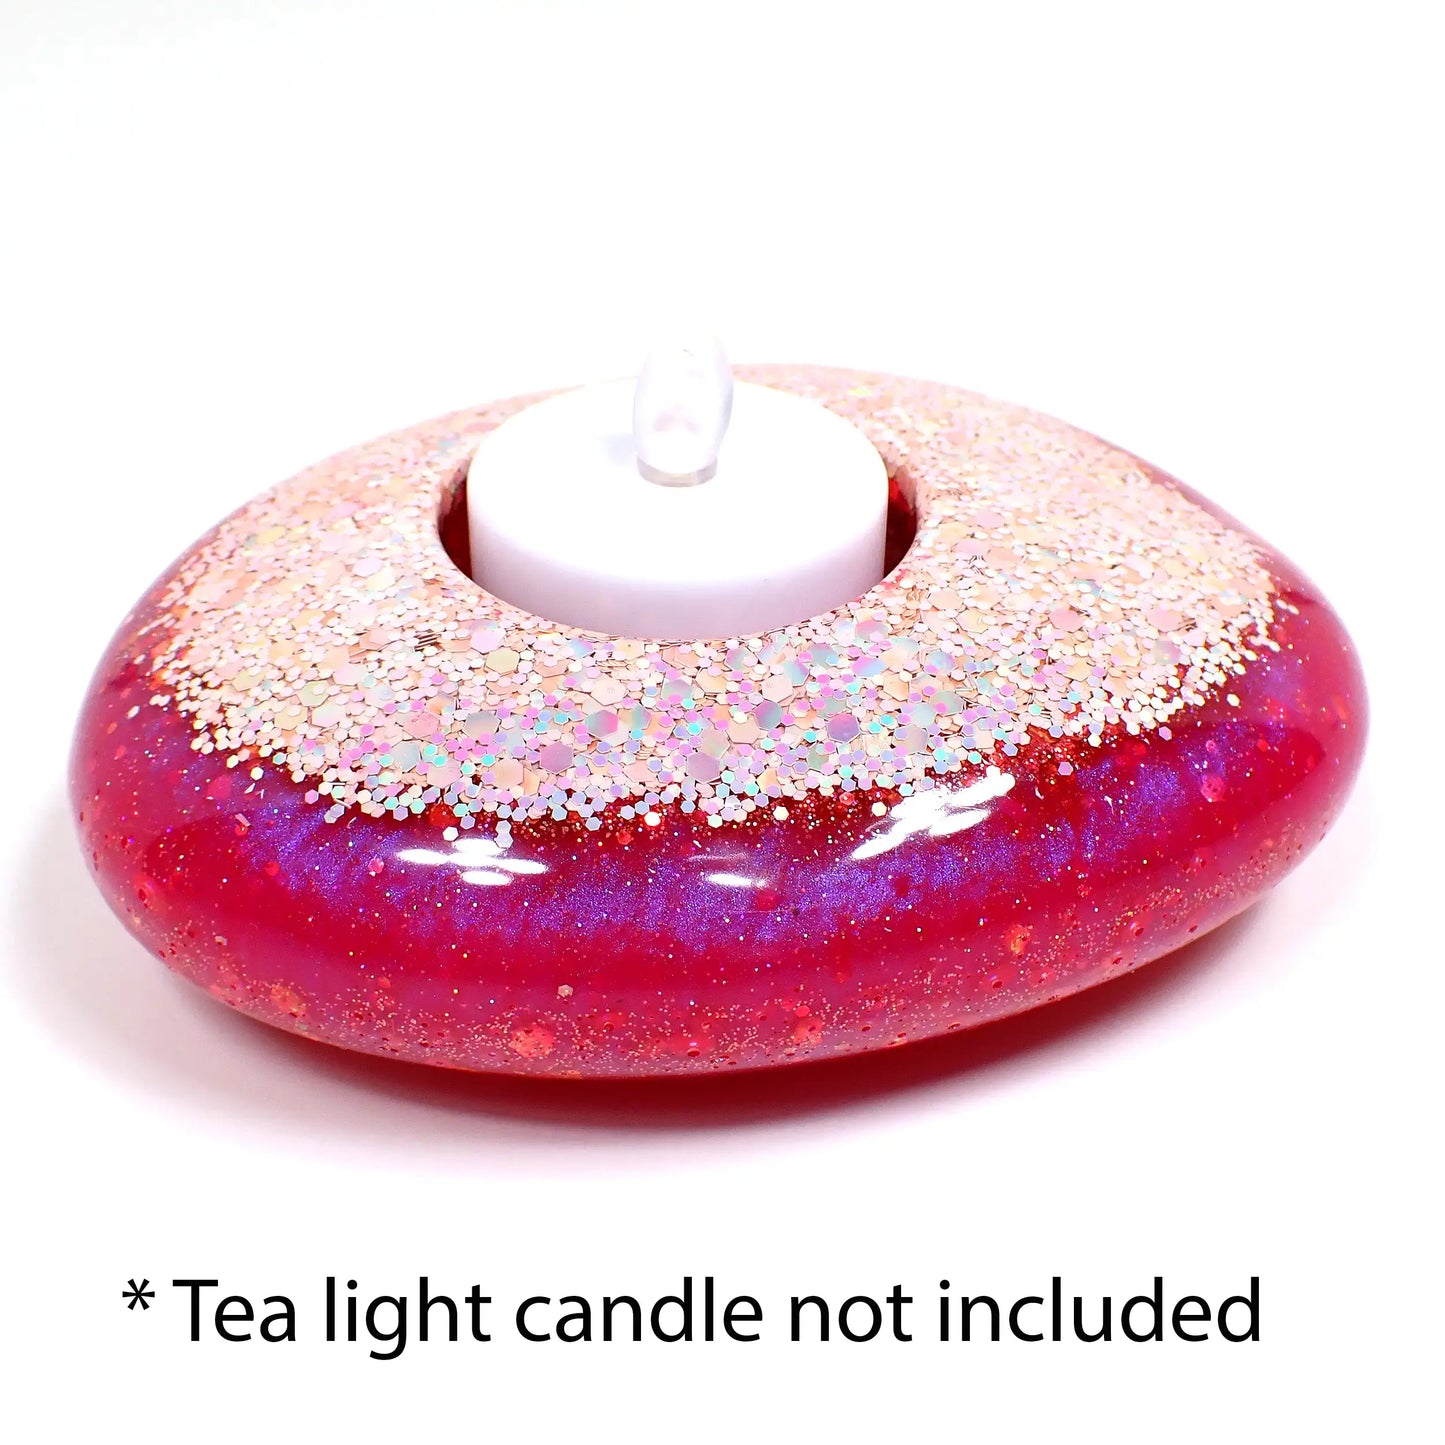 Handmade Asymmetrical Pink and Iridescent Glitter Resin Tea Light Candle Holder